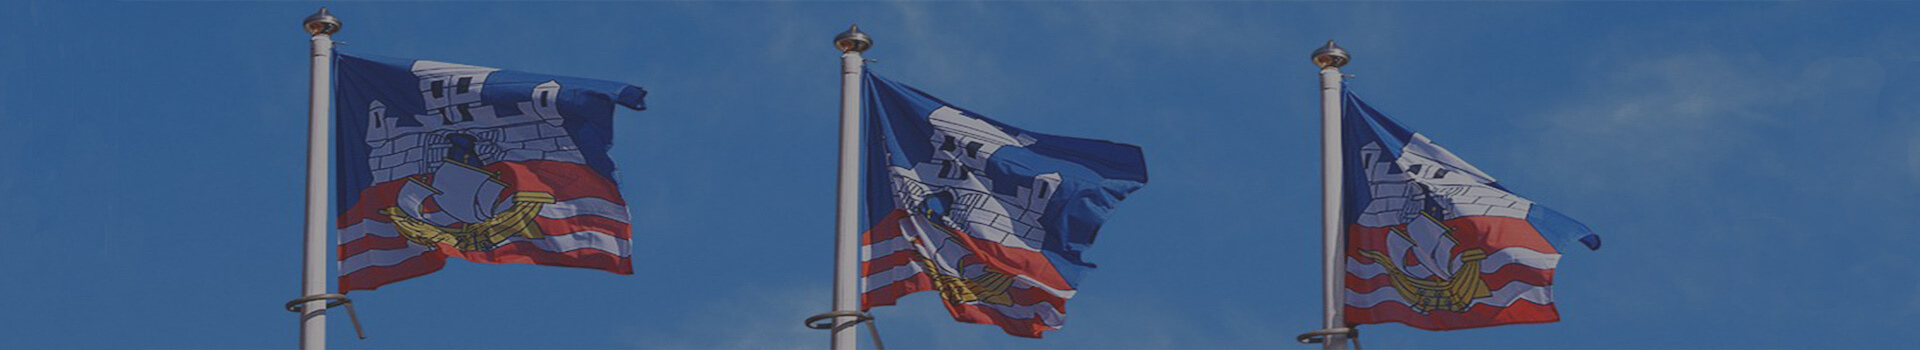 City and municipal flags